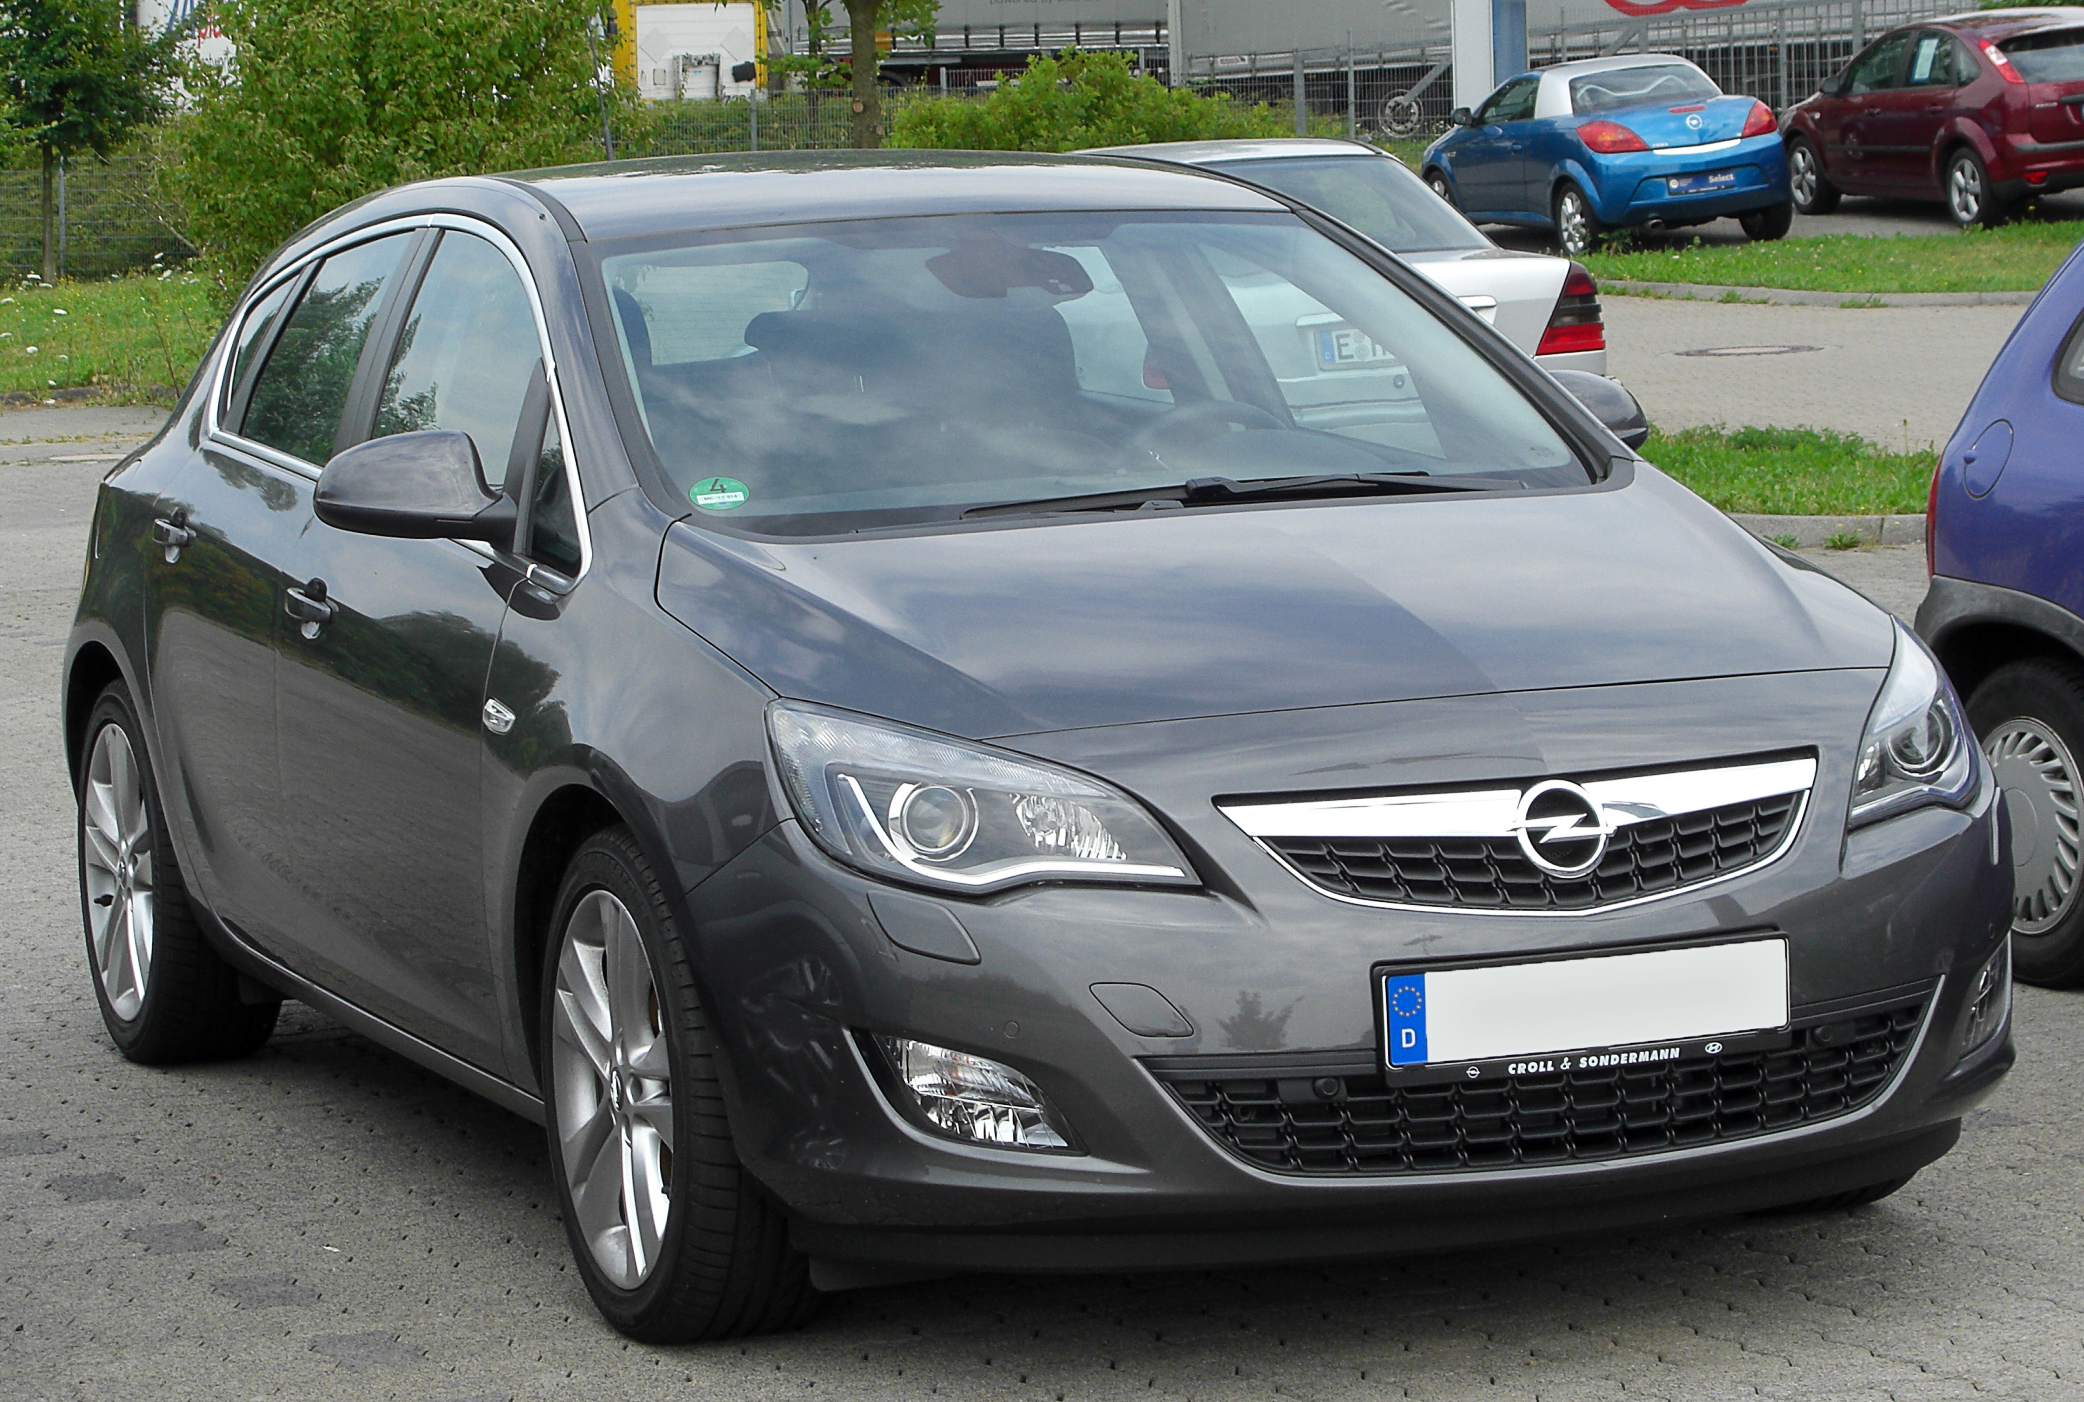 Opel_Astra_J_front_20100725.jpg